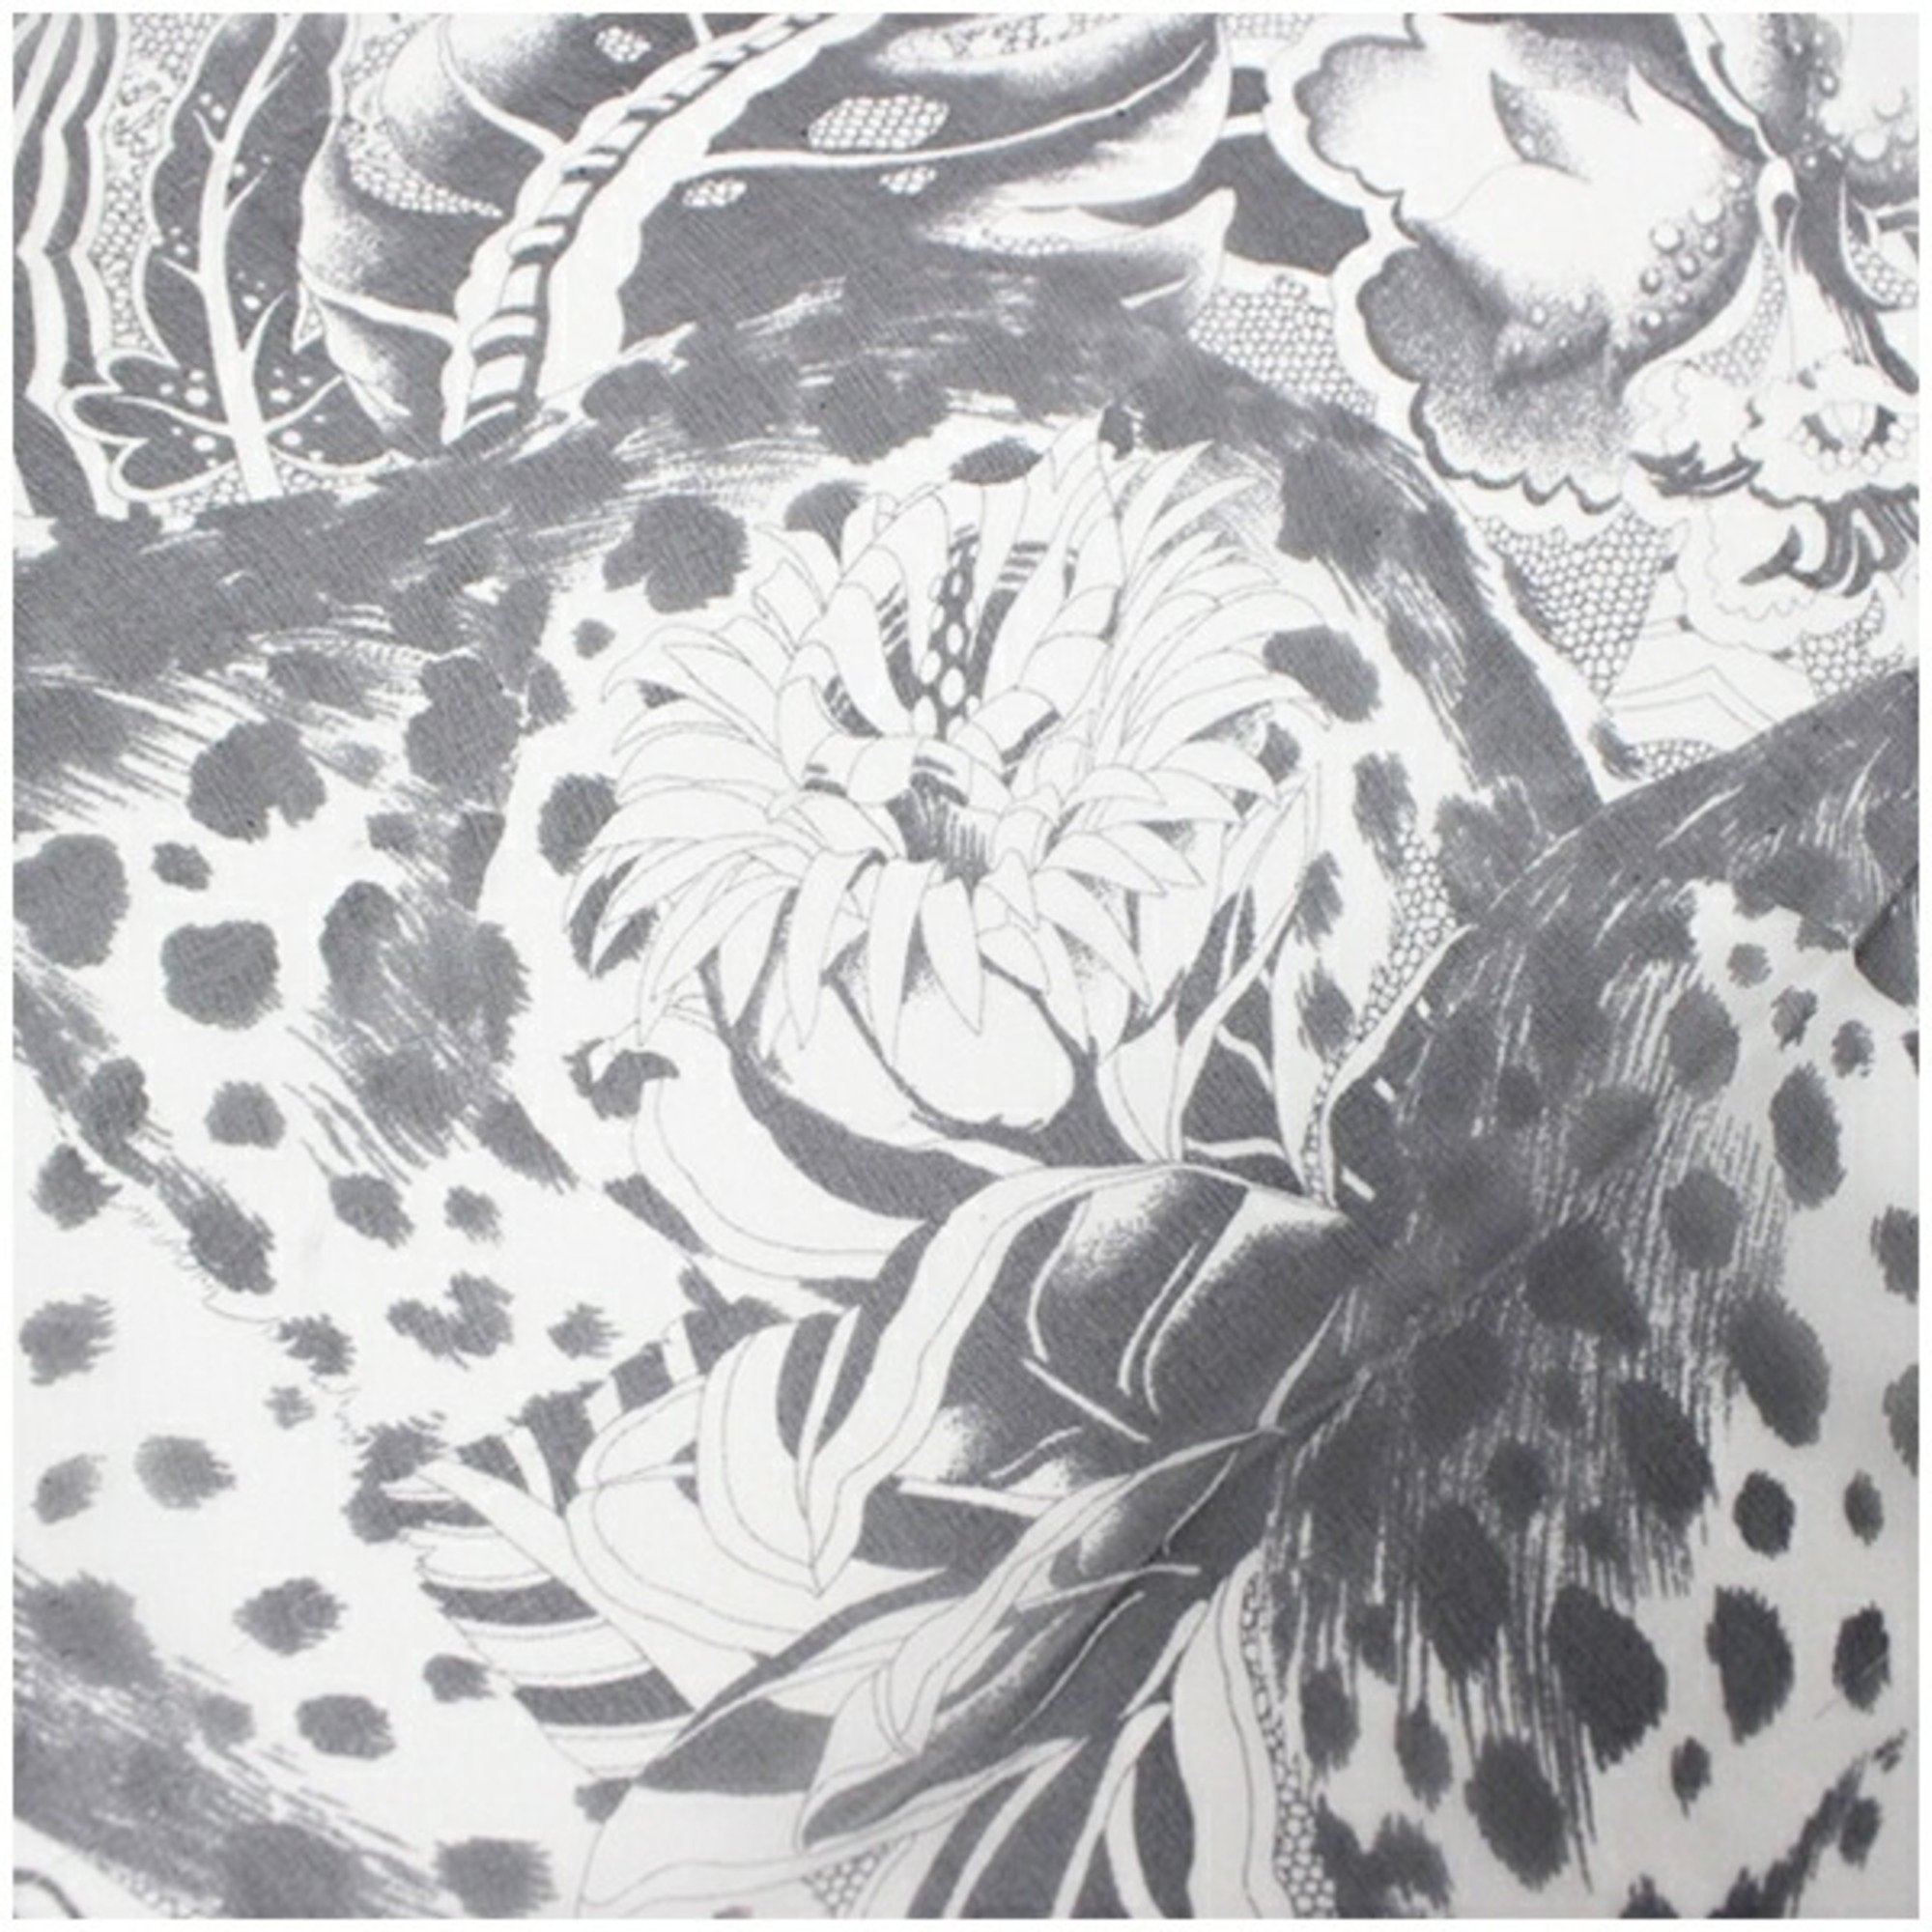 Salvatore Ferragamo Silk Scarf Muffler Stole Leopard Print Ivory x Black Women's